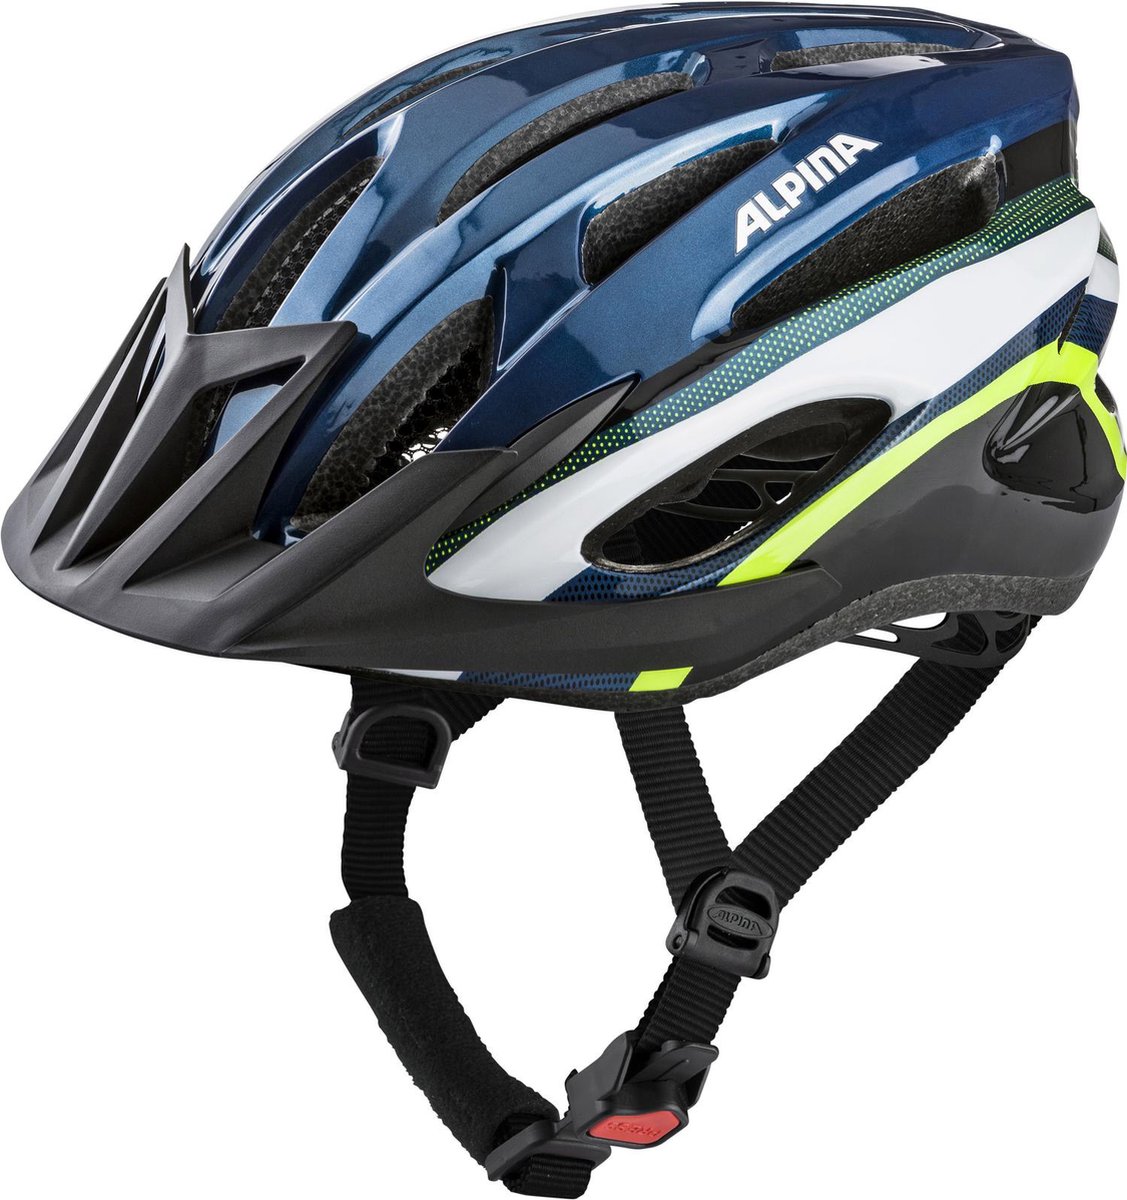 Alpina helm MTB 17 58-62 cm darkblue-neon